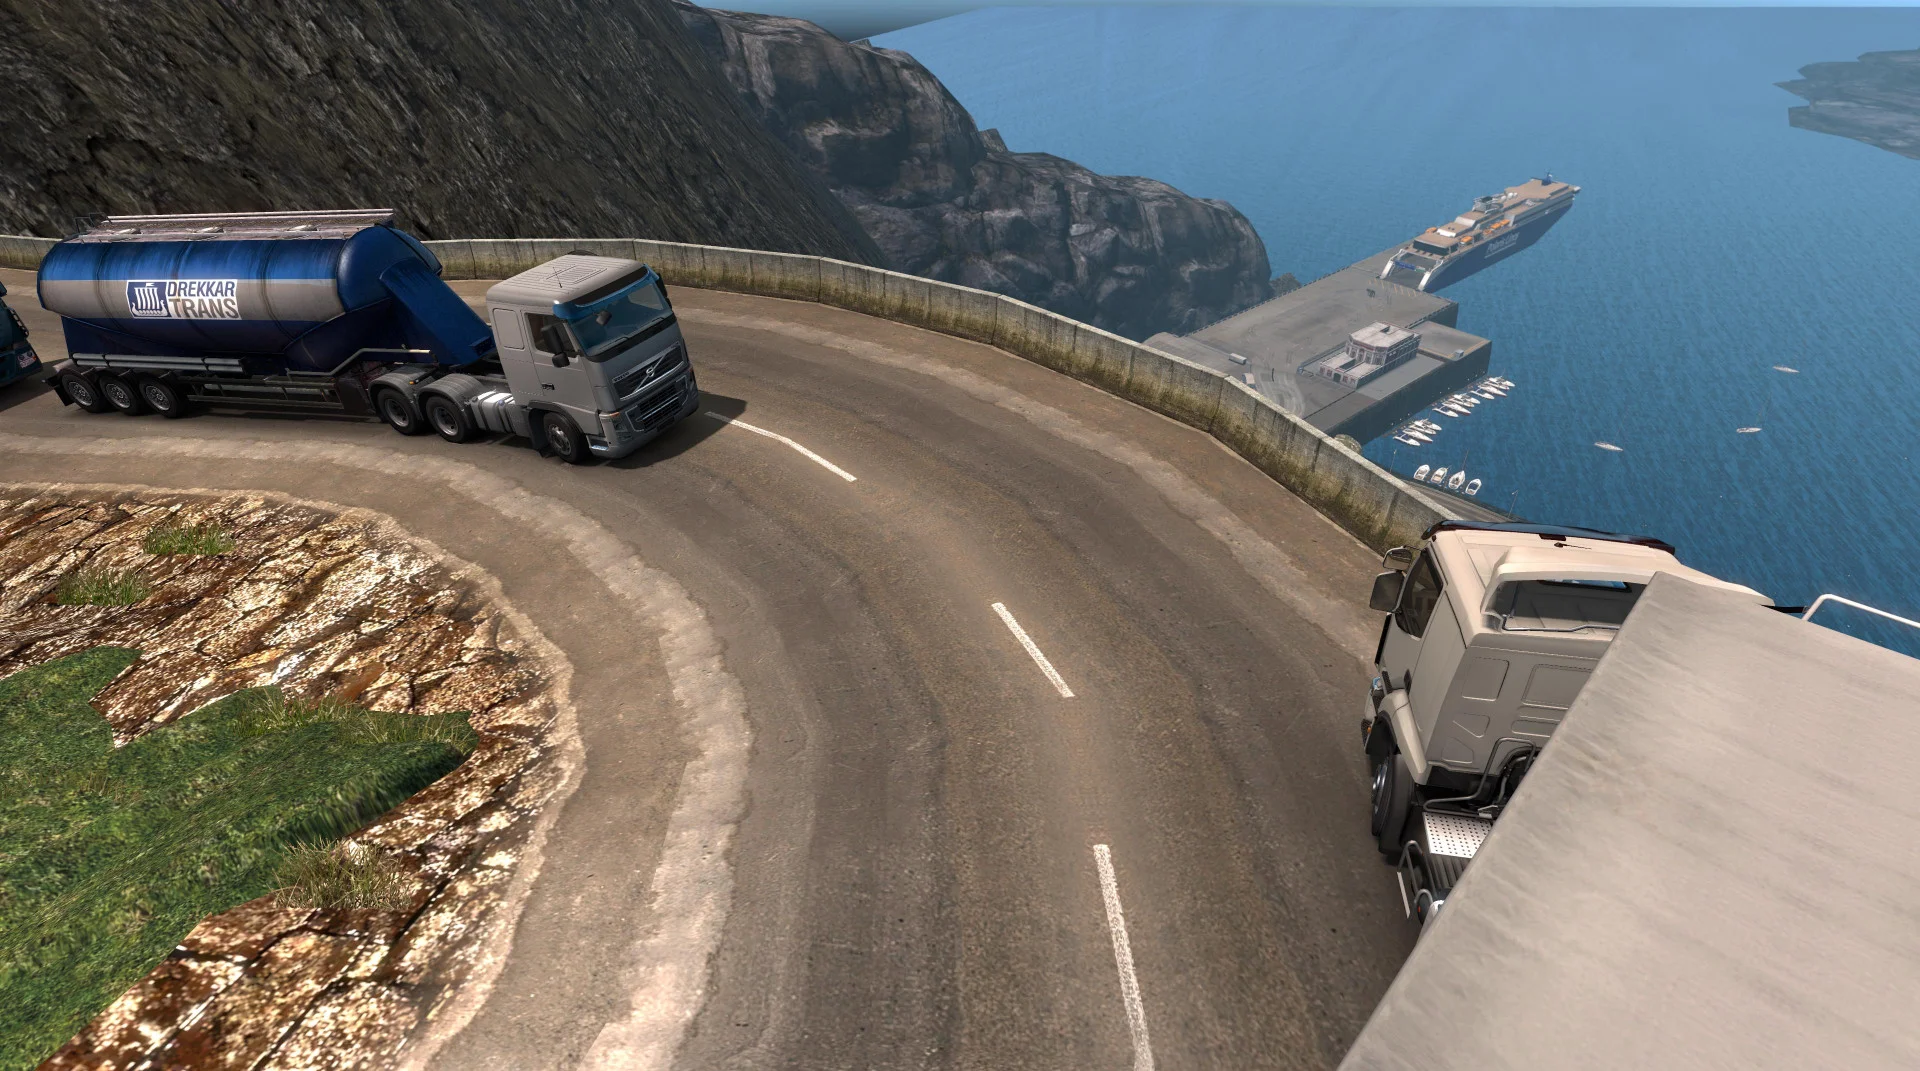 Euro Truck Simulator 2 developers are exploring Greek landmarks for the upcoming DLC Greece